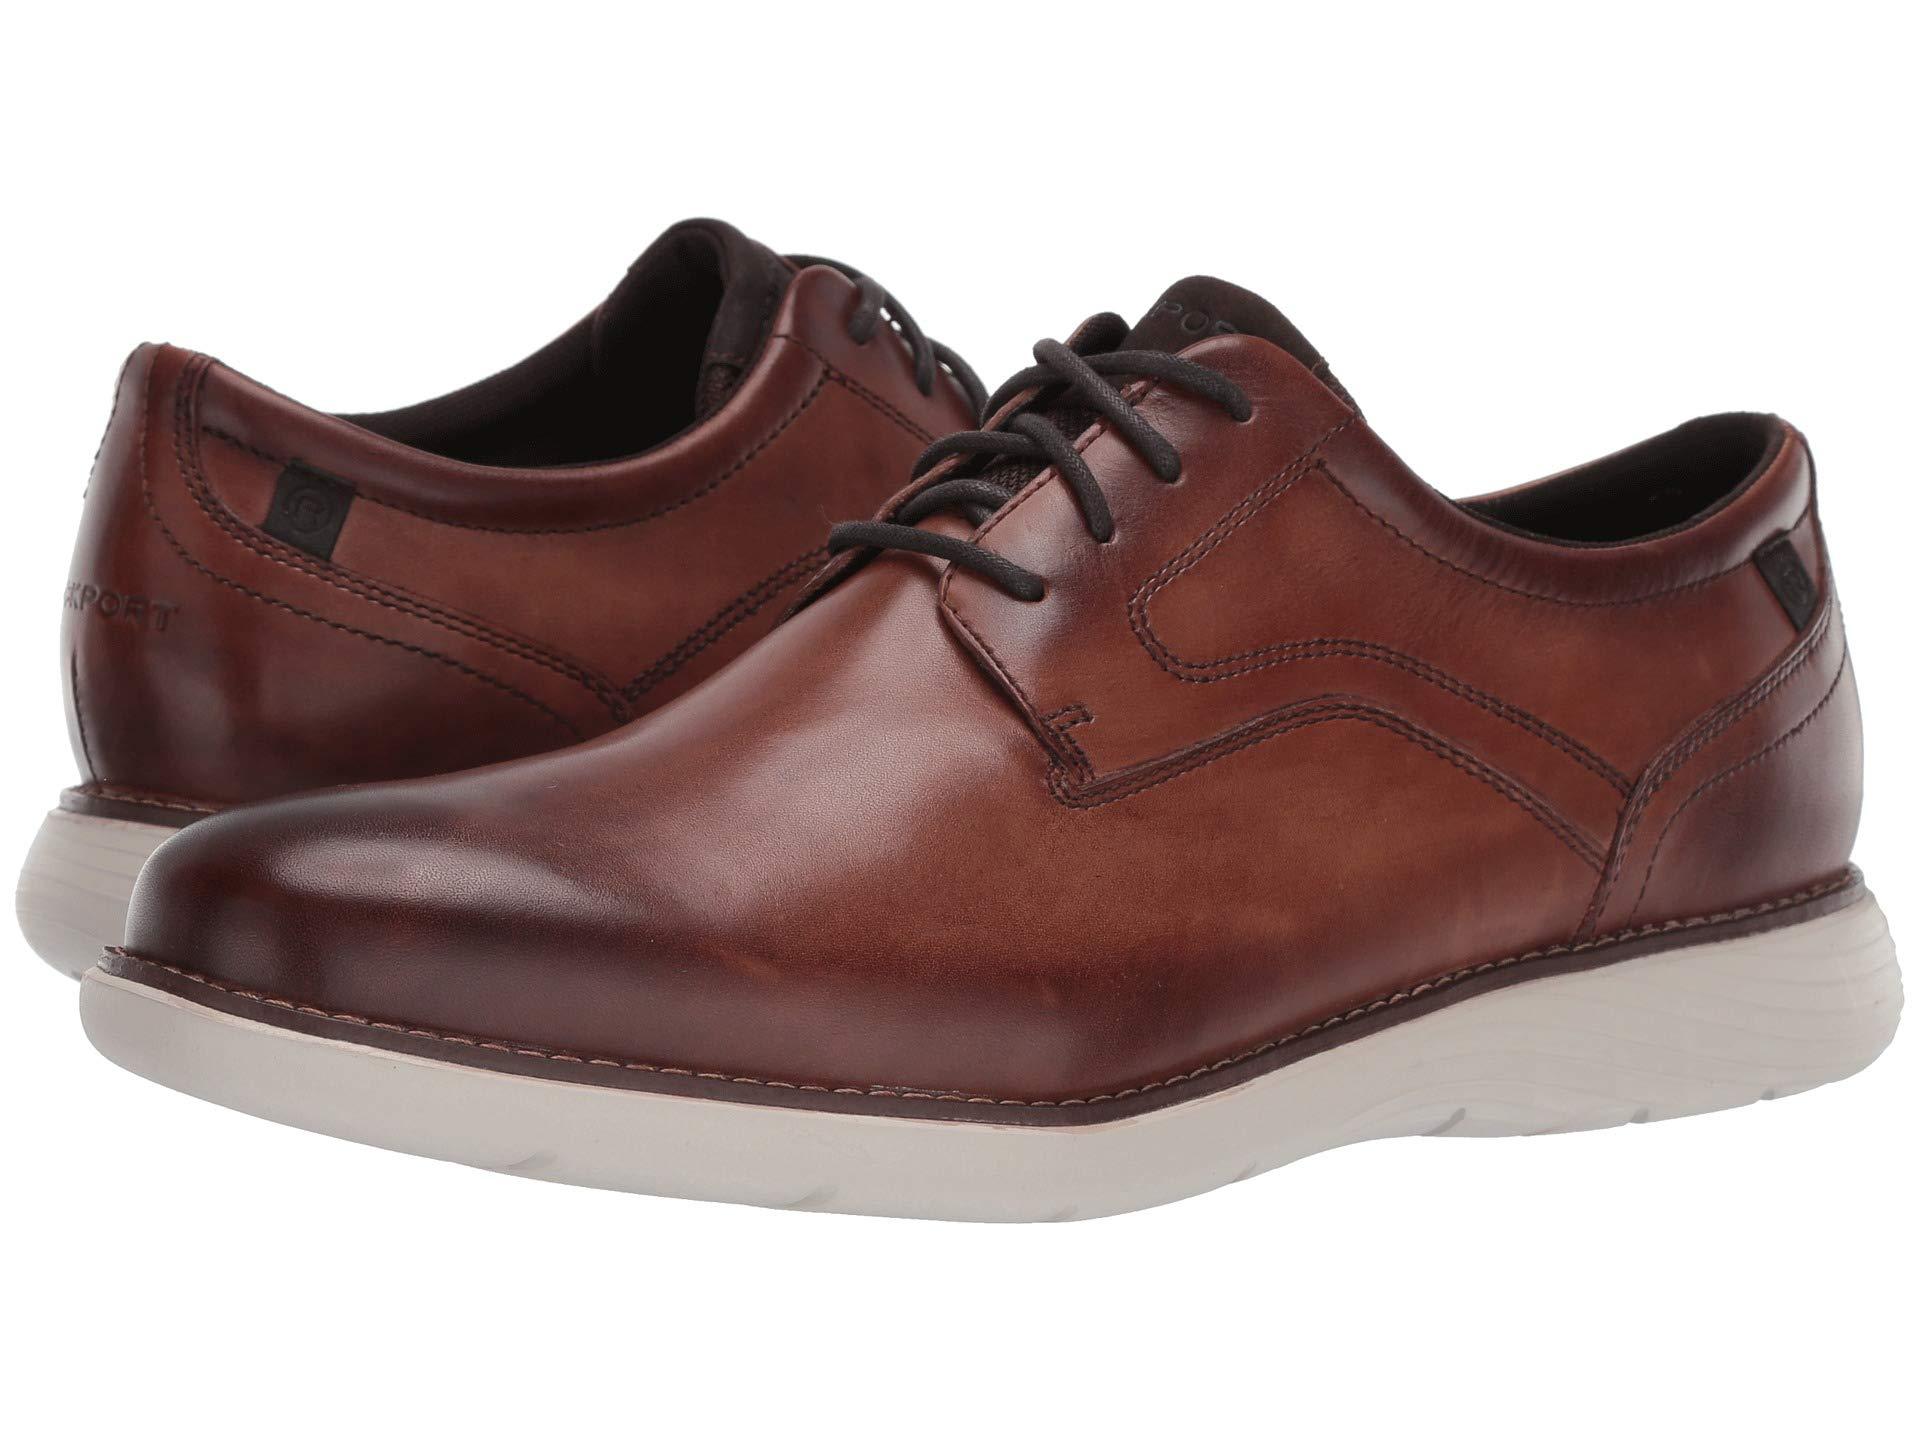 Rockport Leather Garett Plain Toe in Tan (Brown) for Men - Save 45% - Lyst